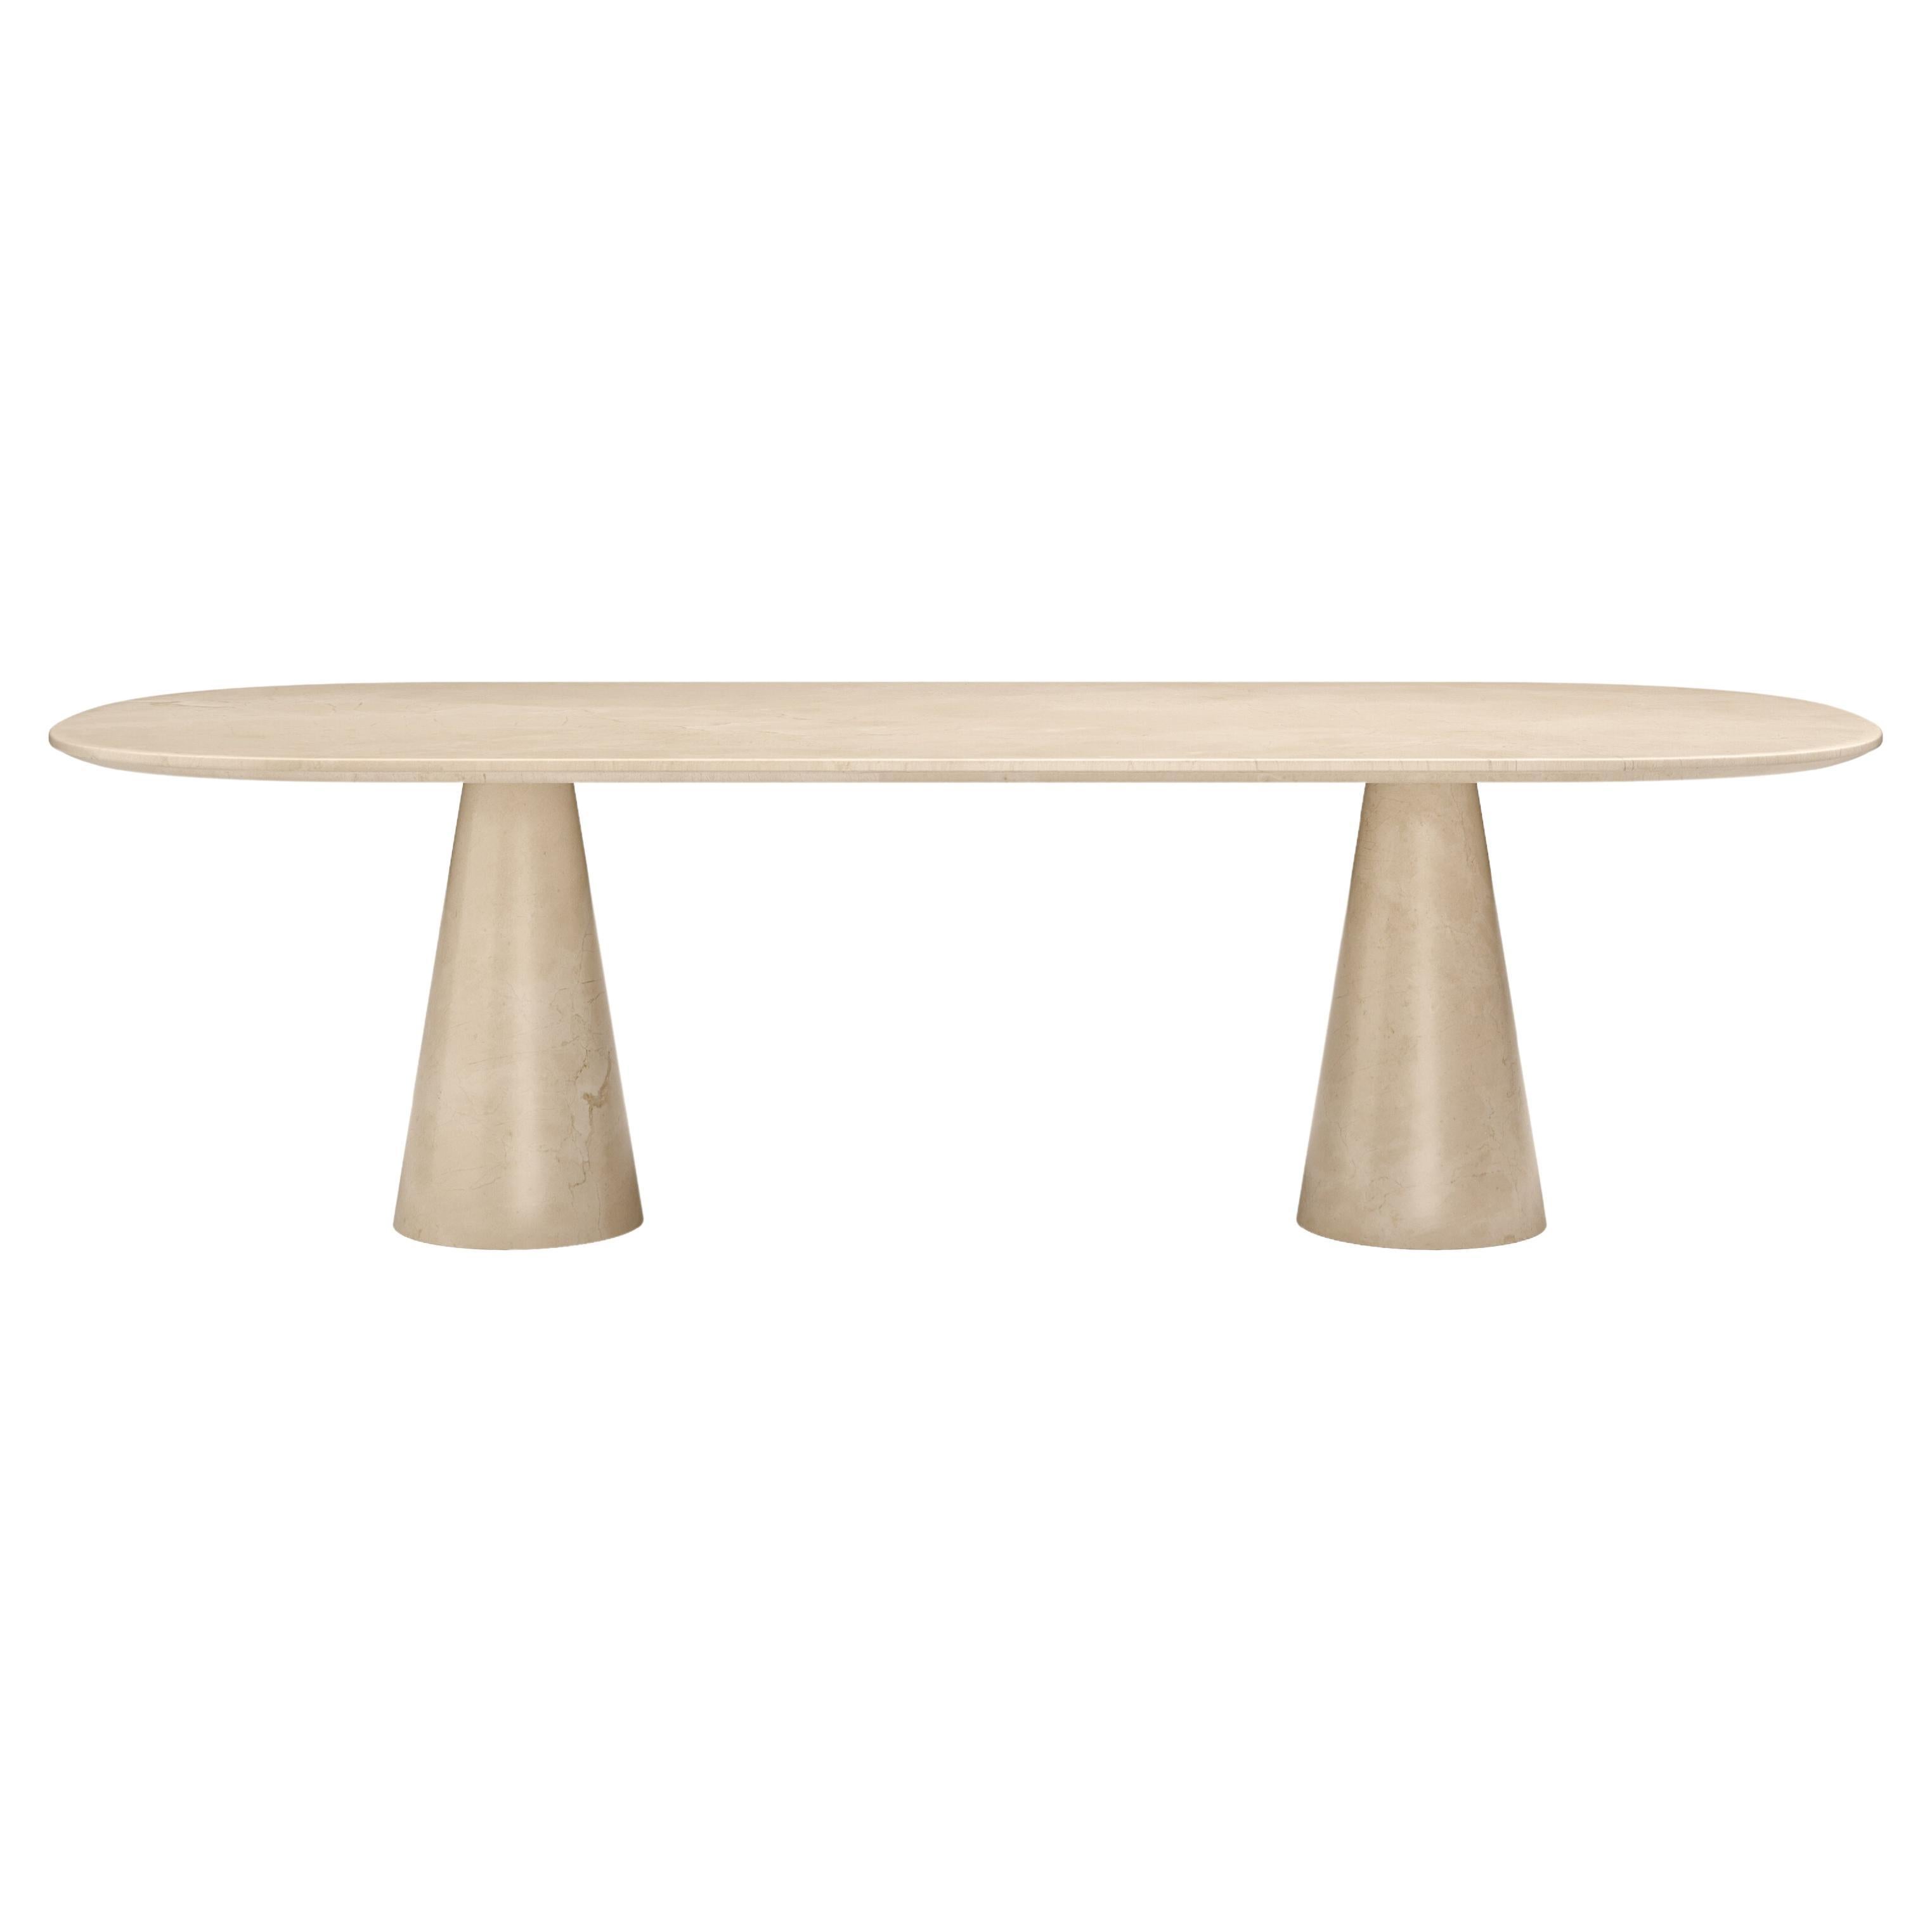 FORM(LA) Cono Oval Dining Table 96”L x 42”W x 30”H Crema Marfil Marble For Sale